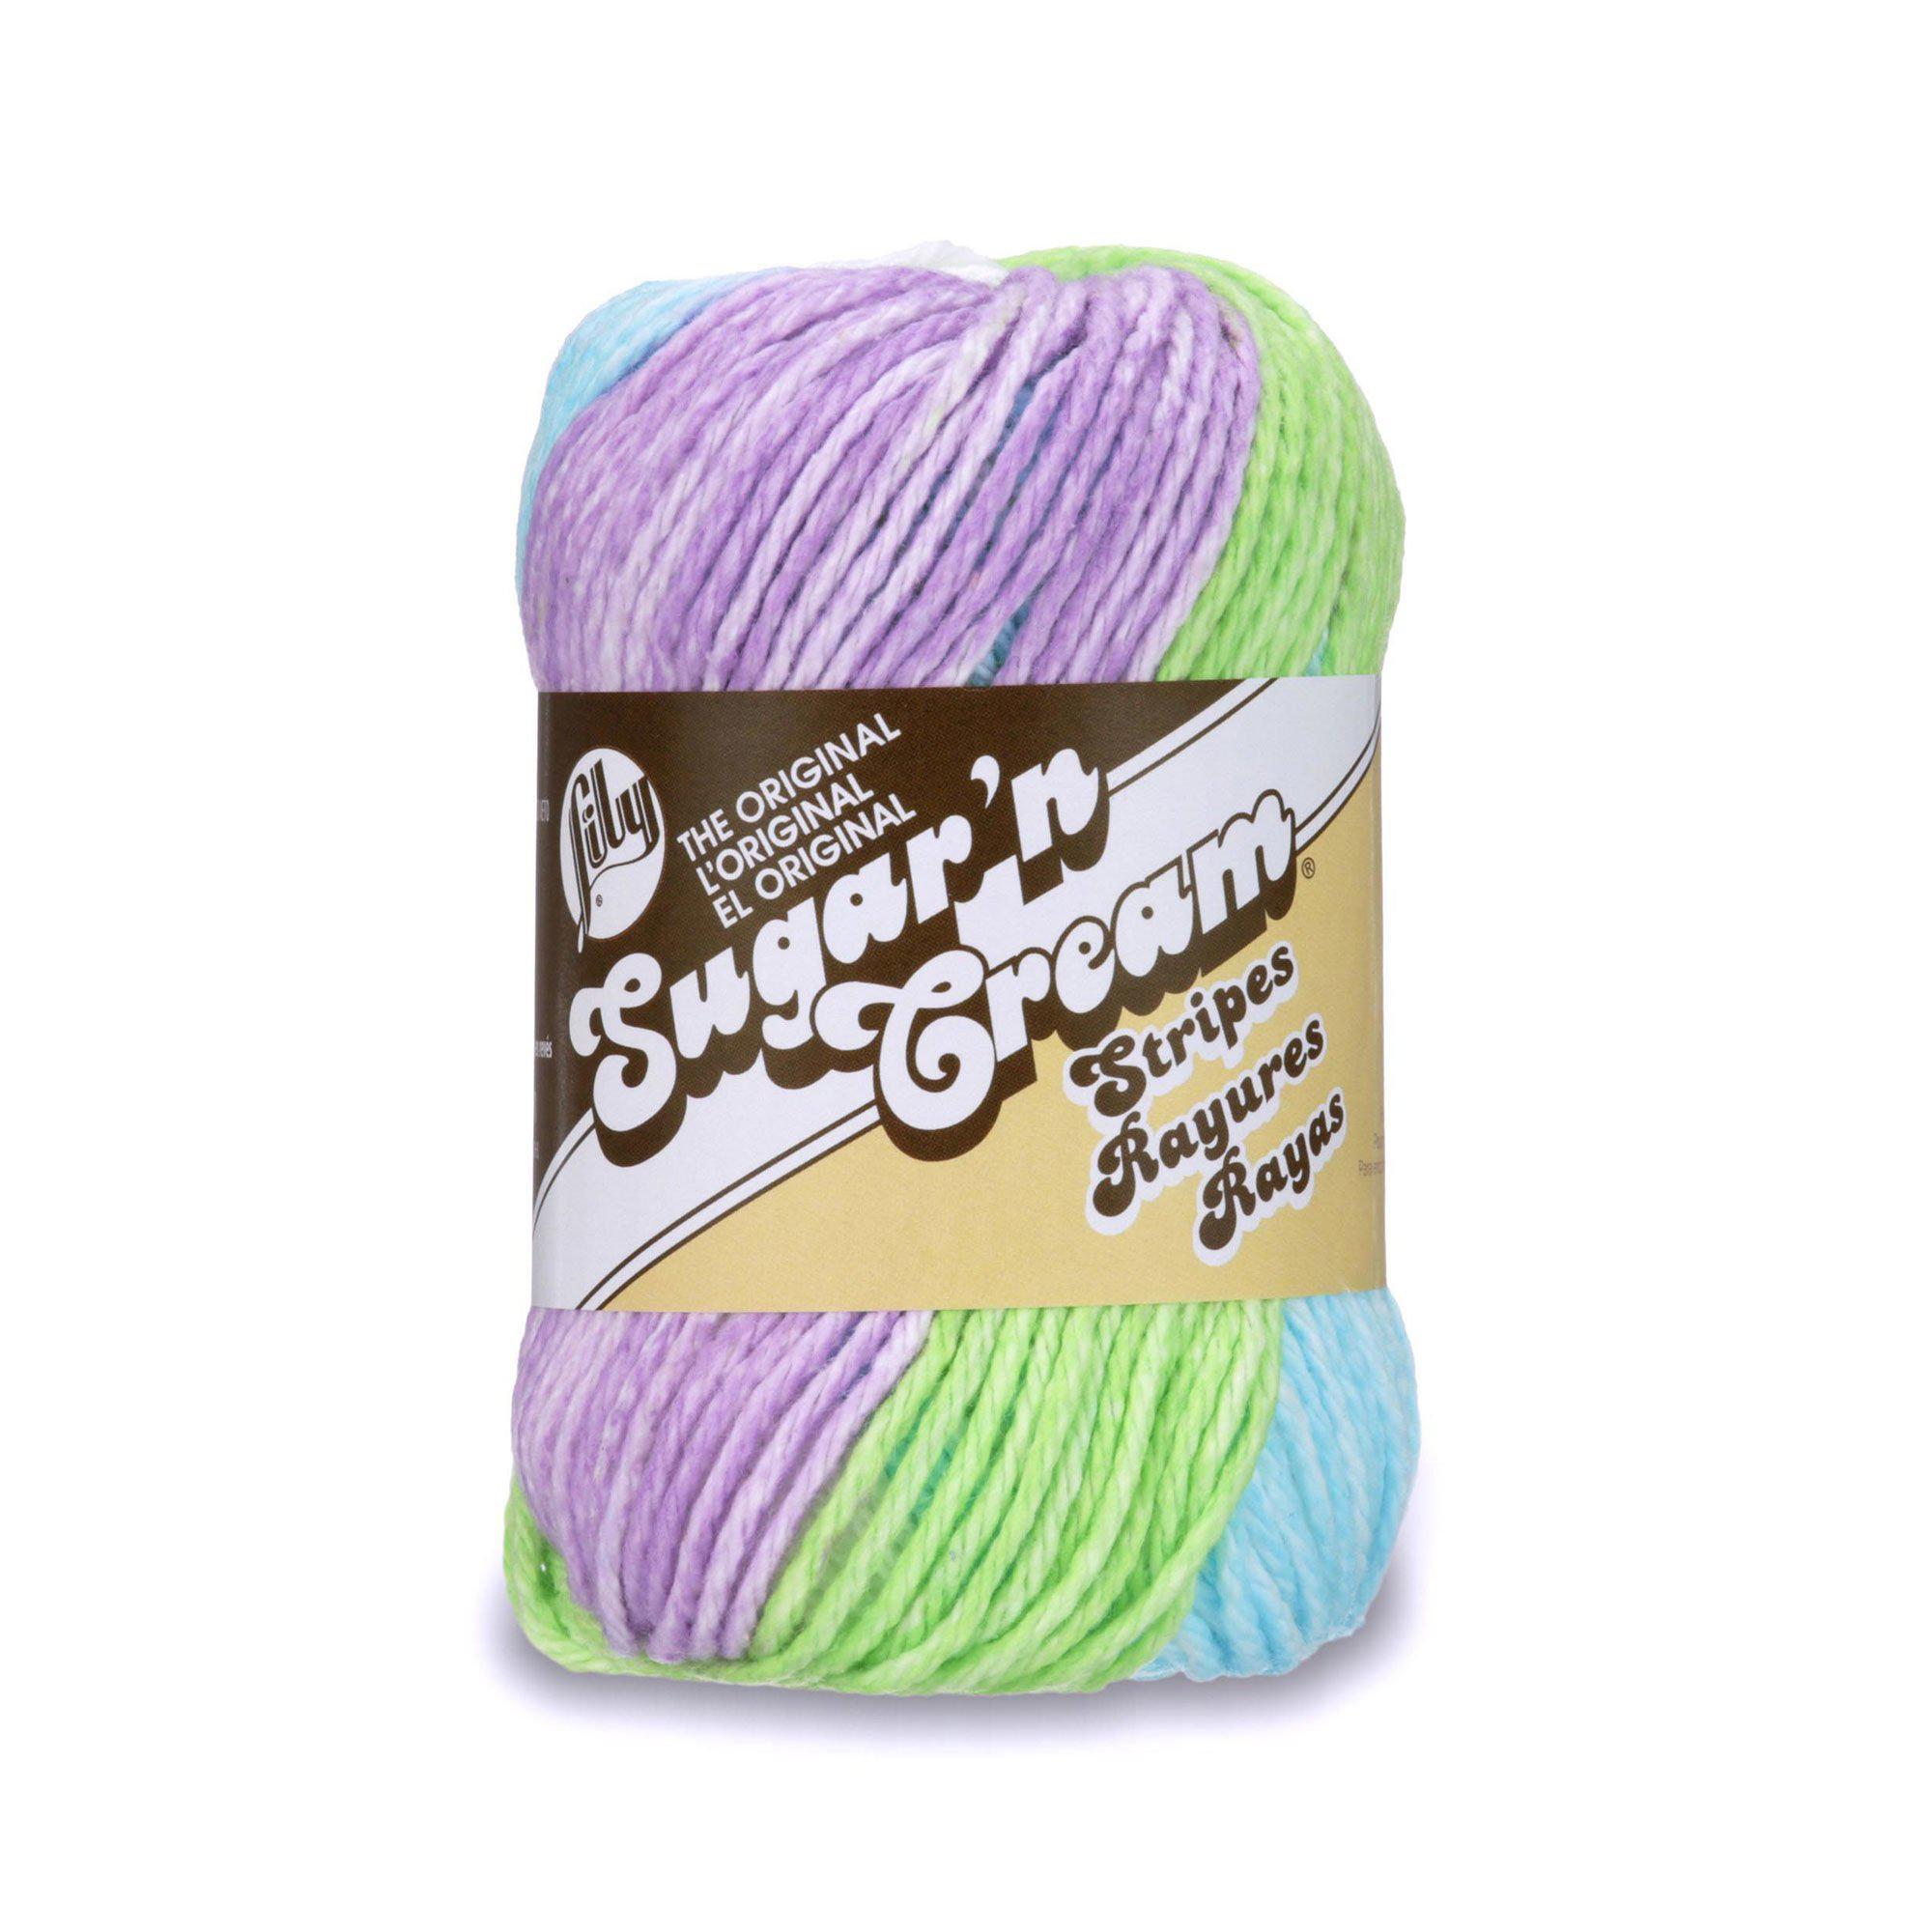 lily sugar and cream cotton yarn, violet stripes, 2 oz.